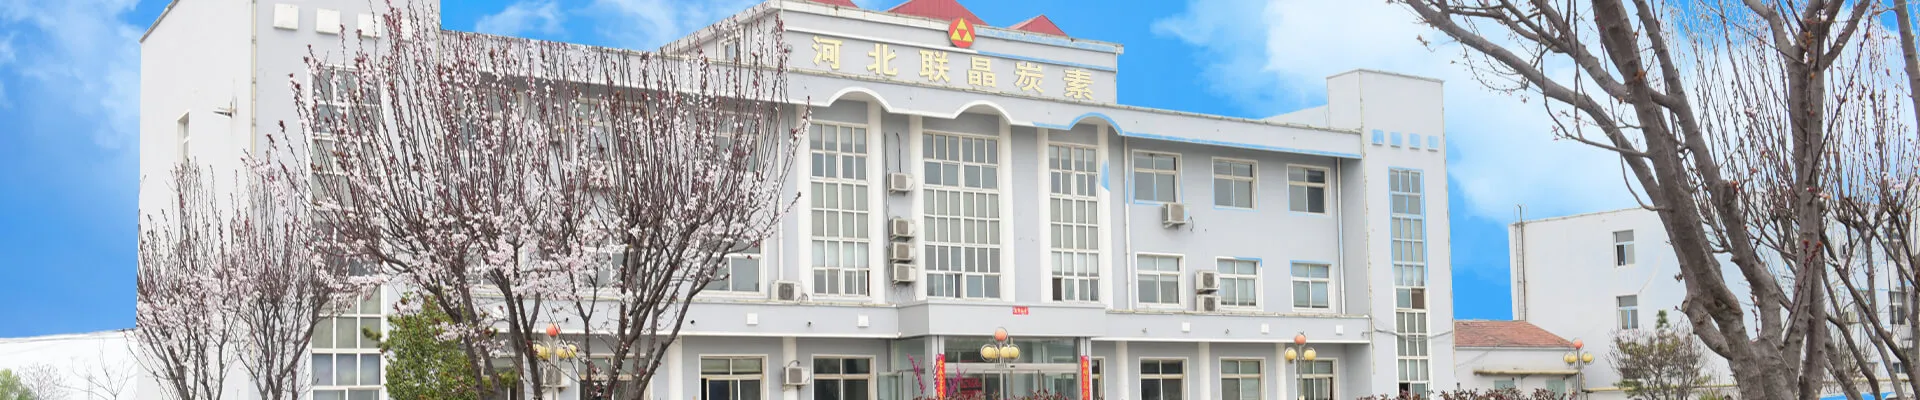 شركة Hebei Lianjing Carbon New Material Tech Co.، Ltd.